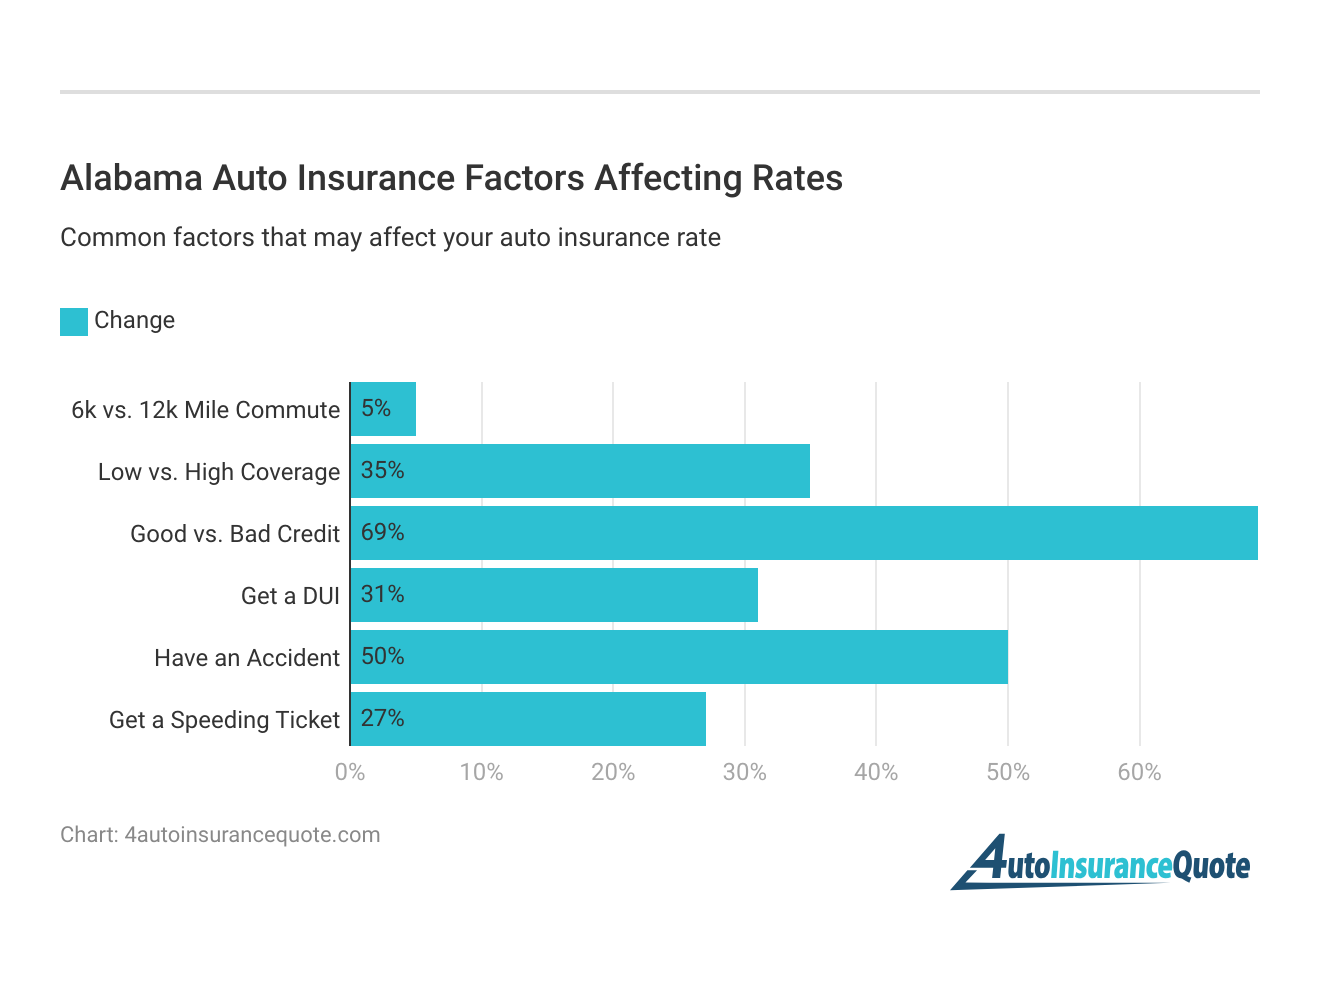 <h3>Alabama Auto Insurance Factors Affecting Rates</h3>